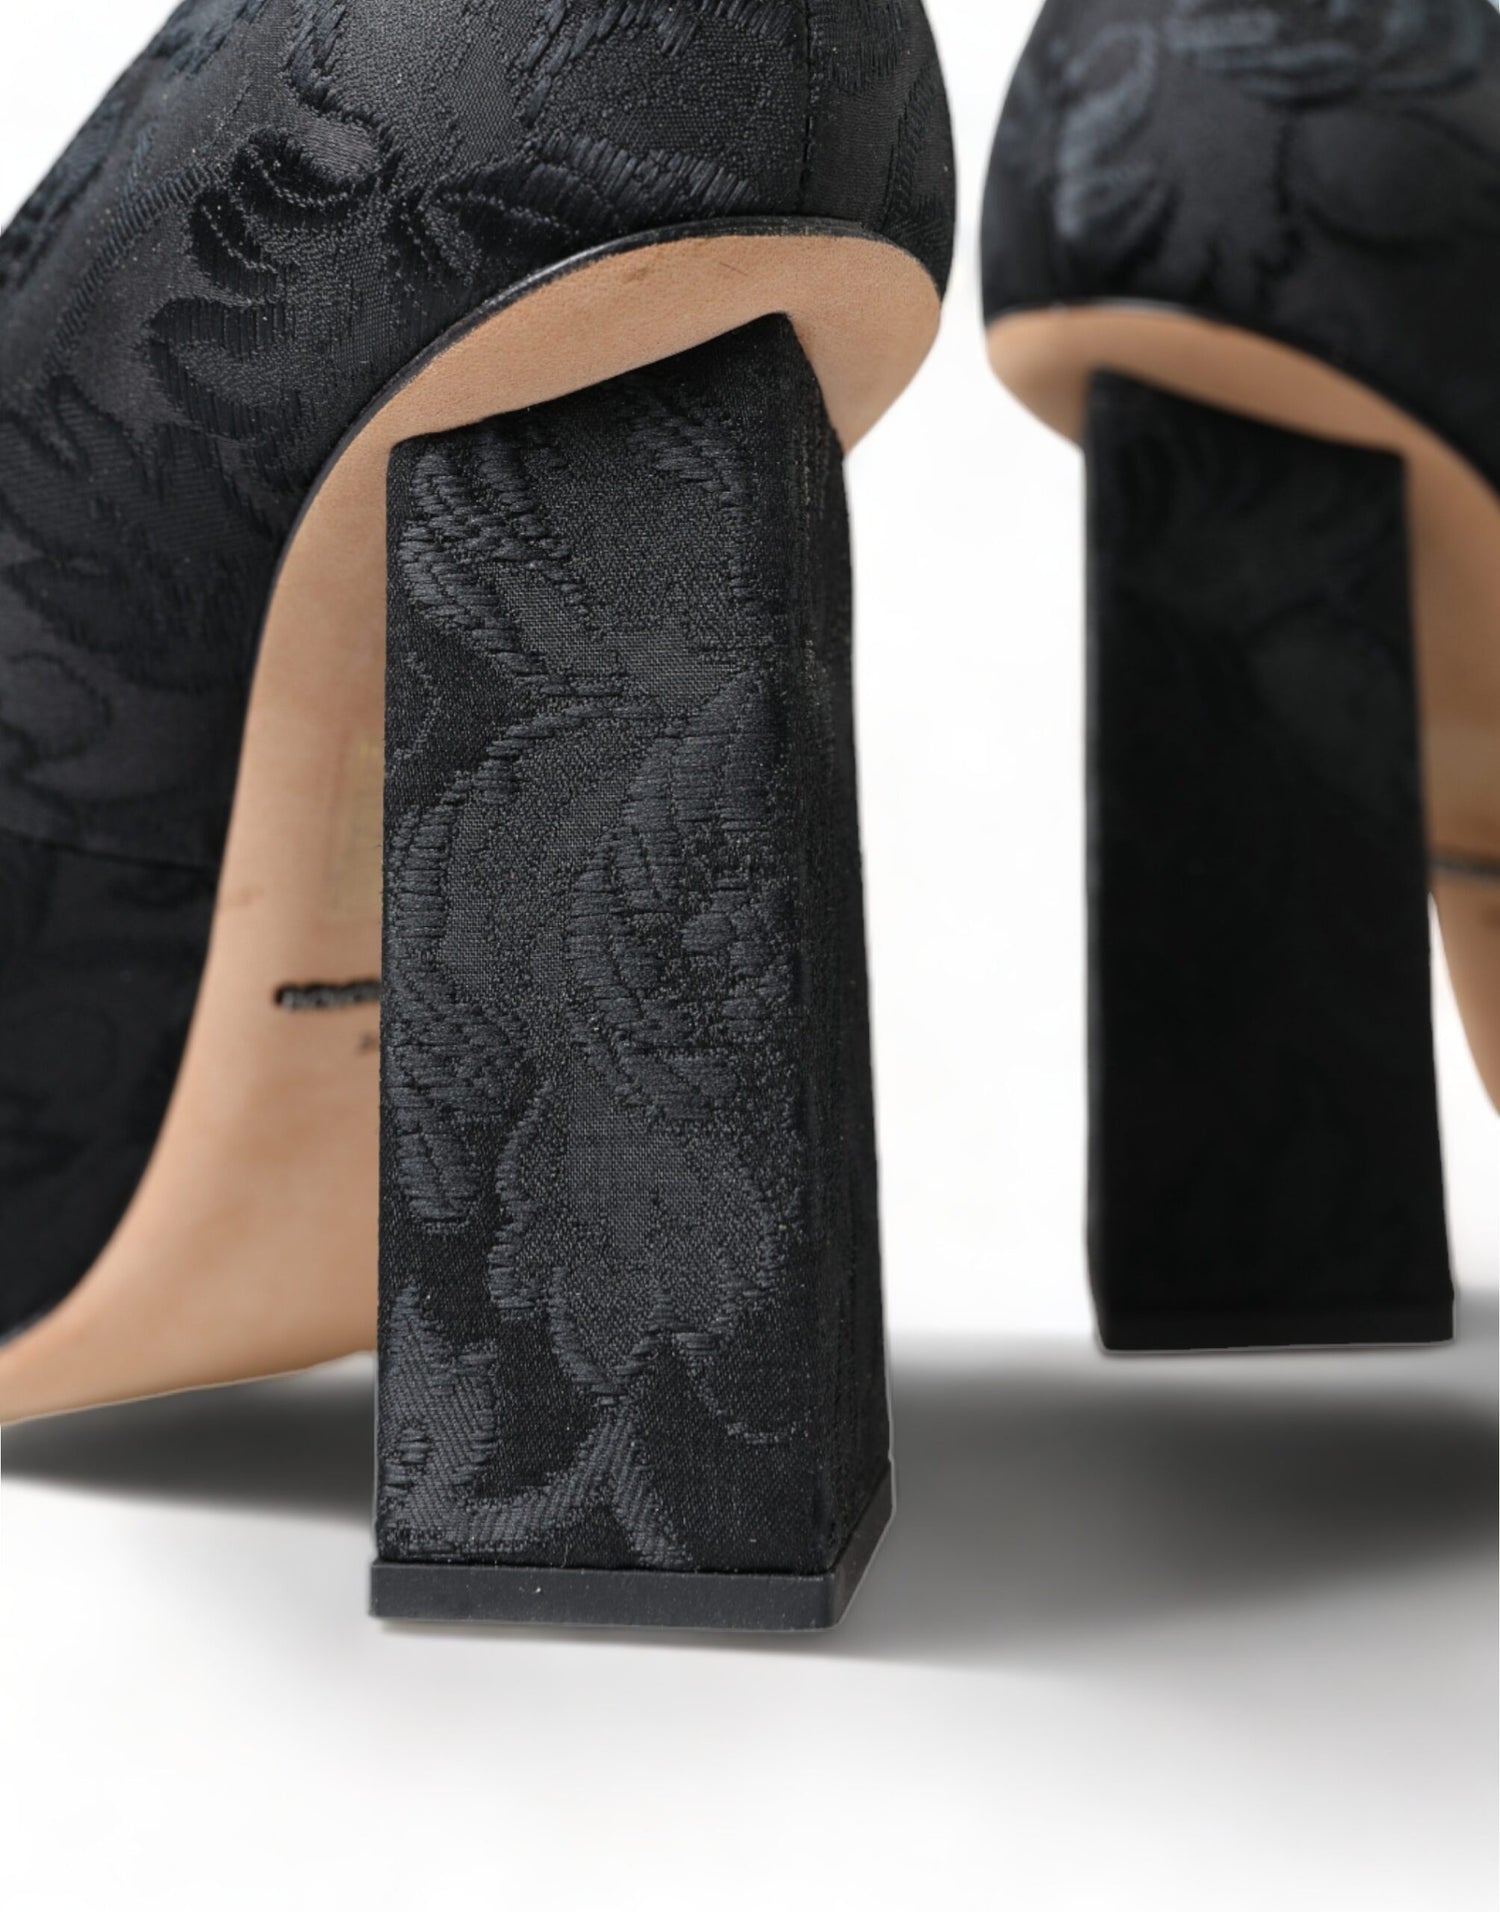 Dolce & Gabbana Black Brocade Mary Janes Heels Pumps Shoes - DEA STILOSA MILANO